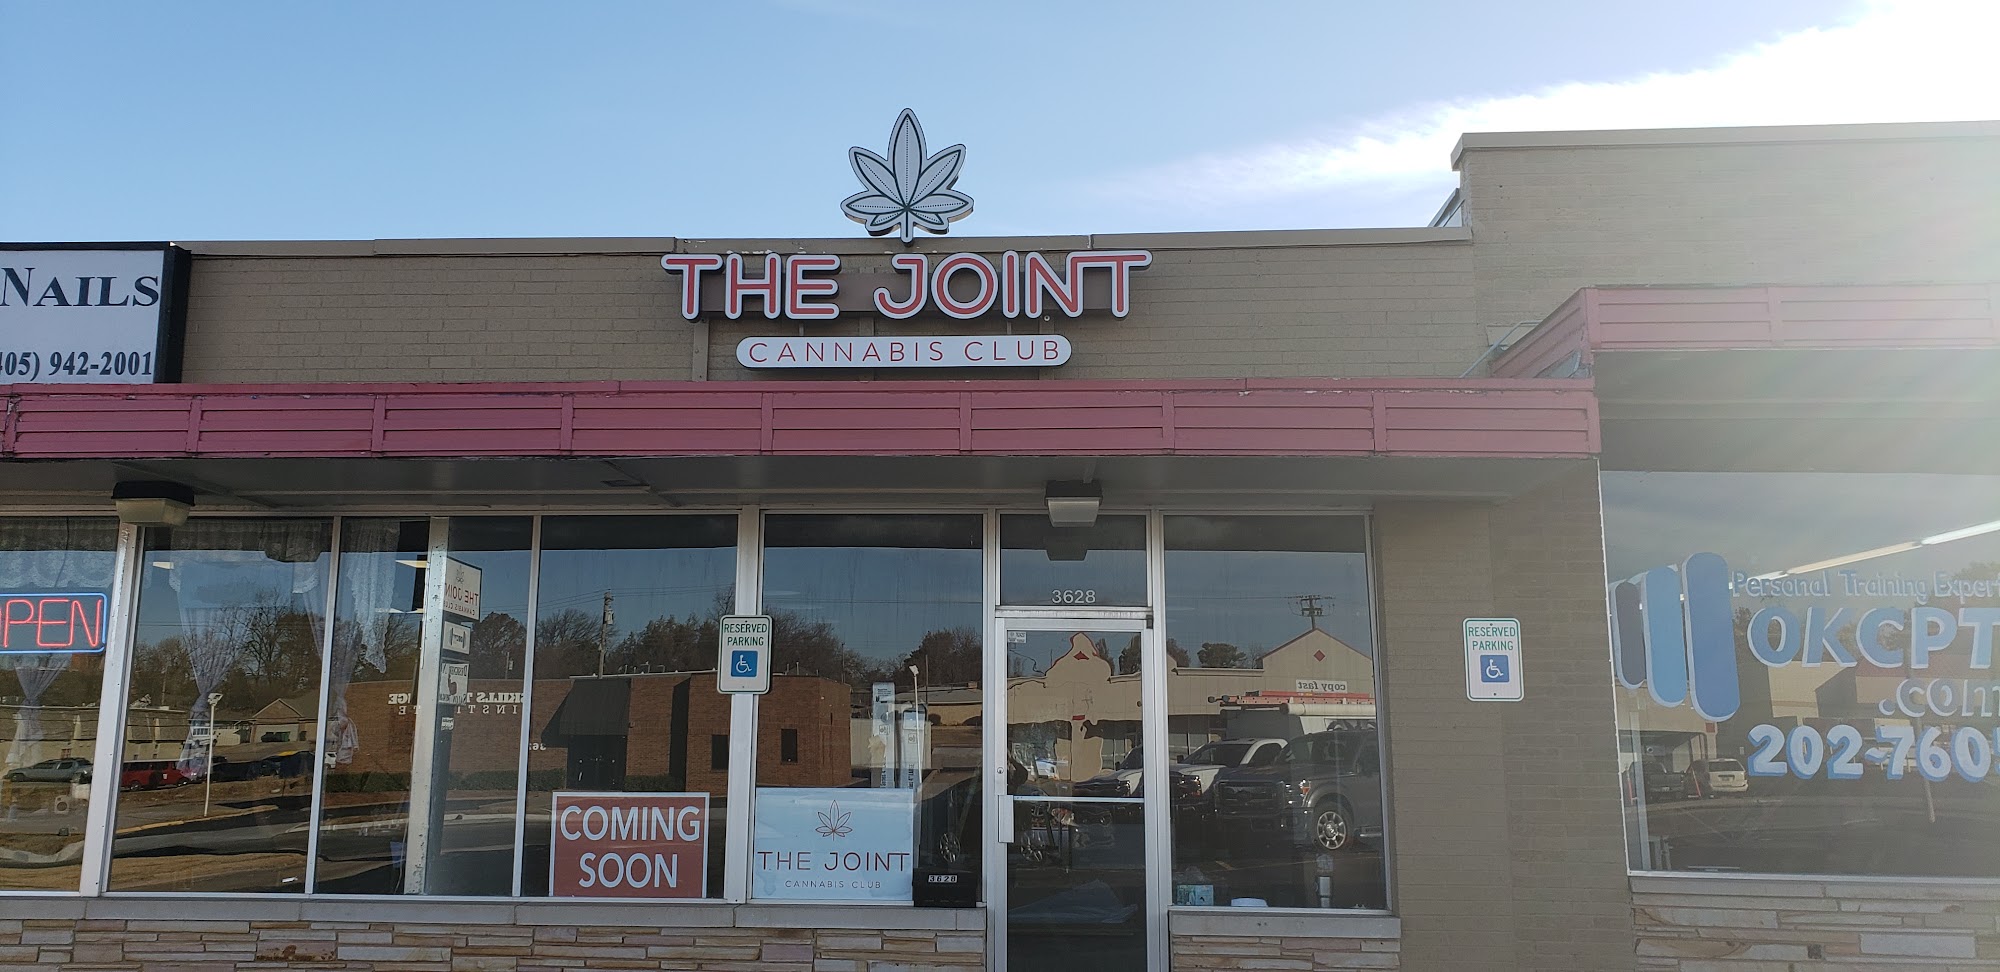 The Joint Cannabis Club